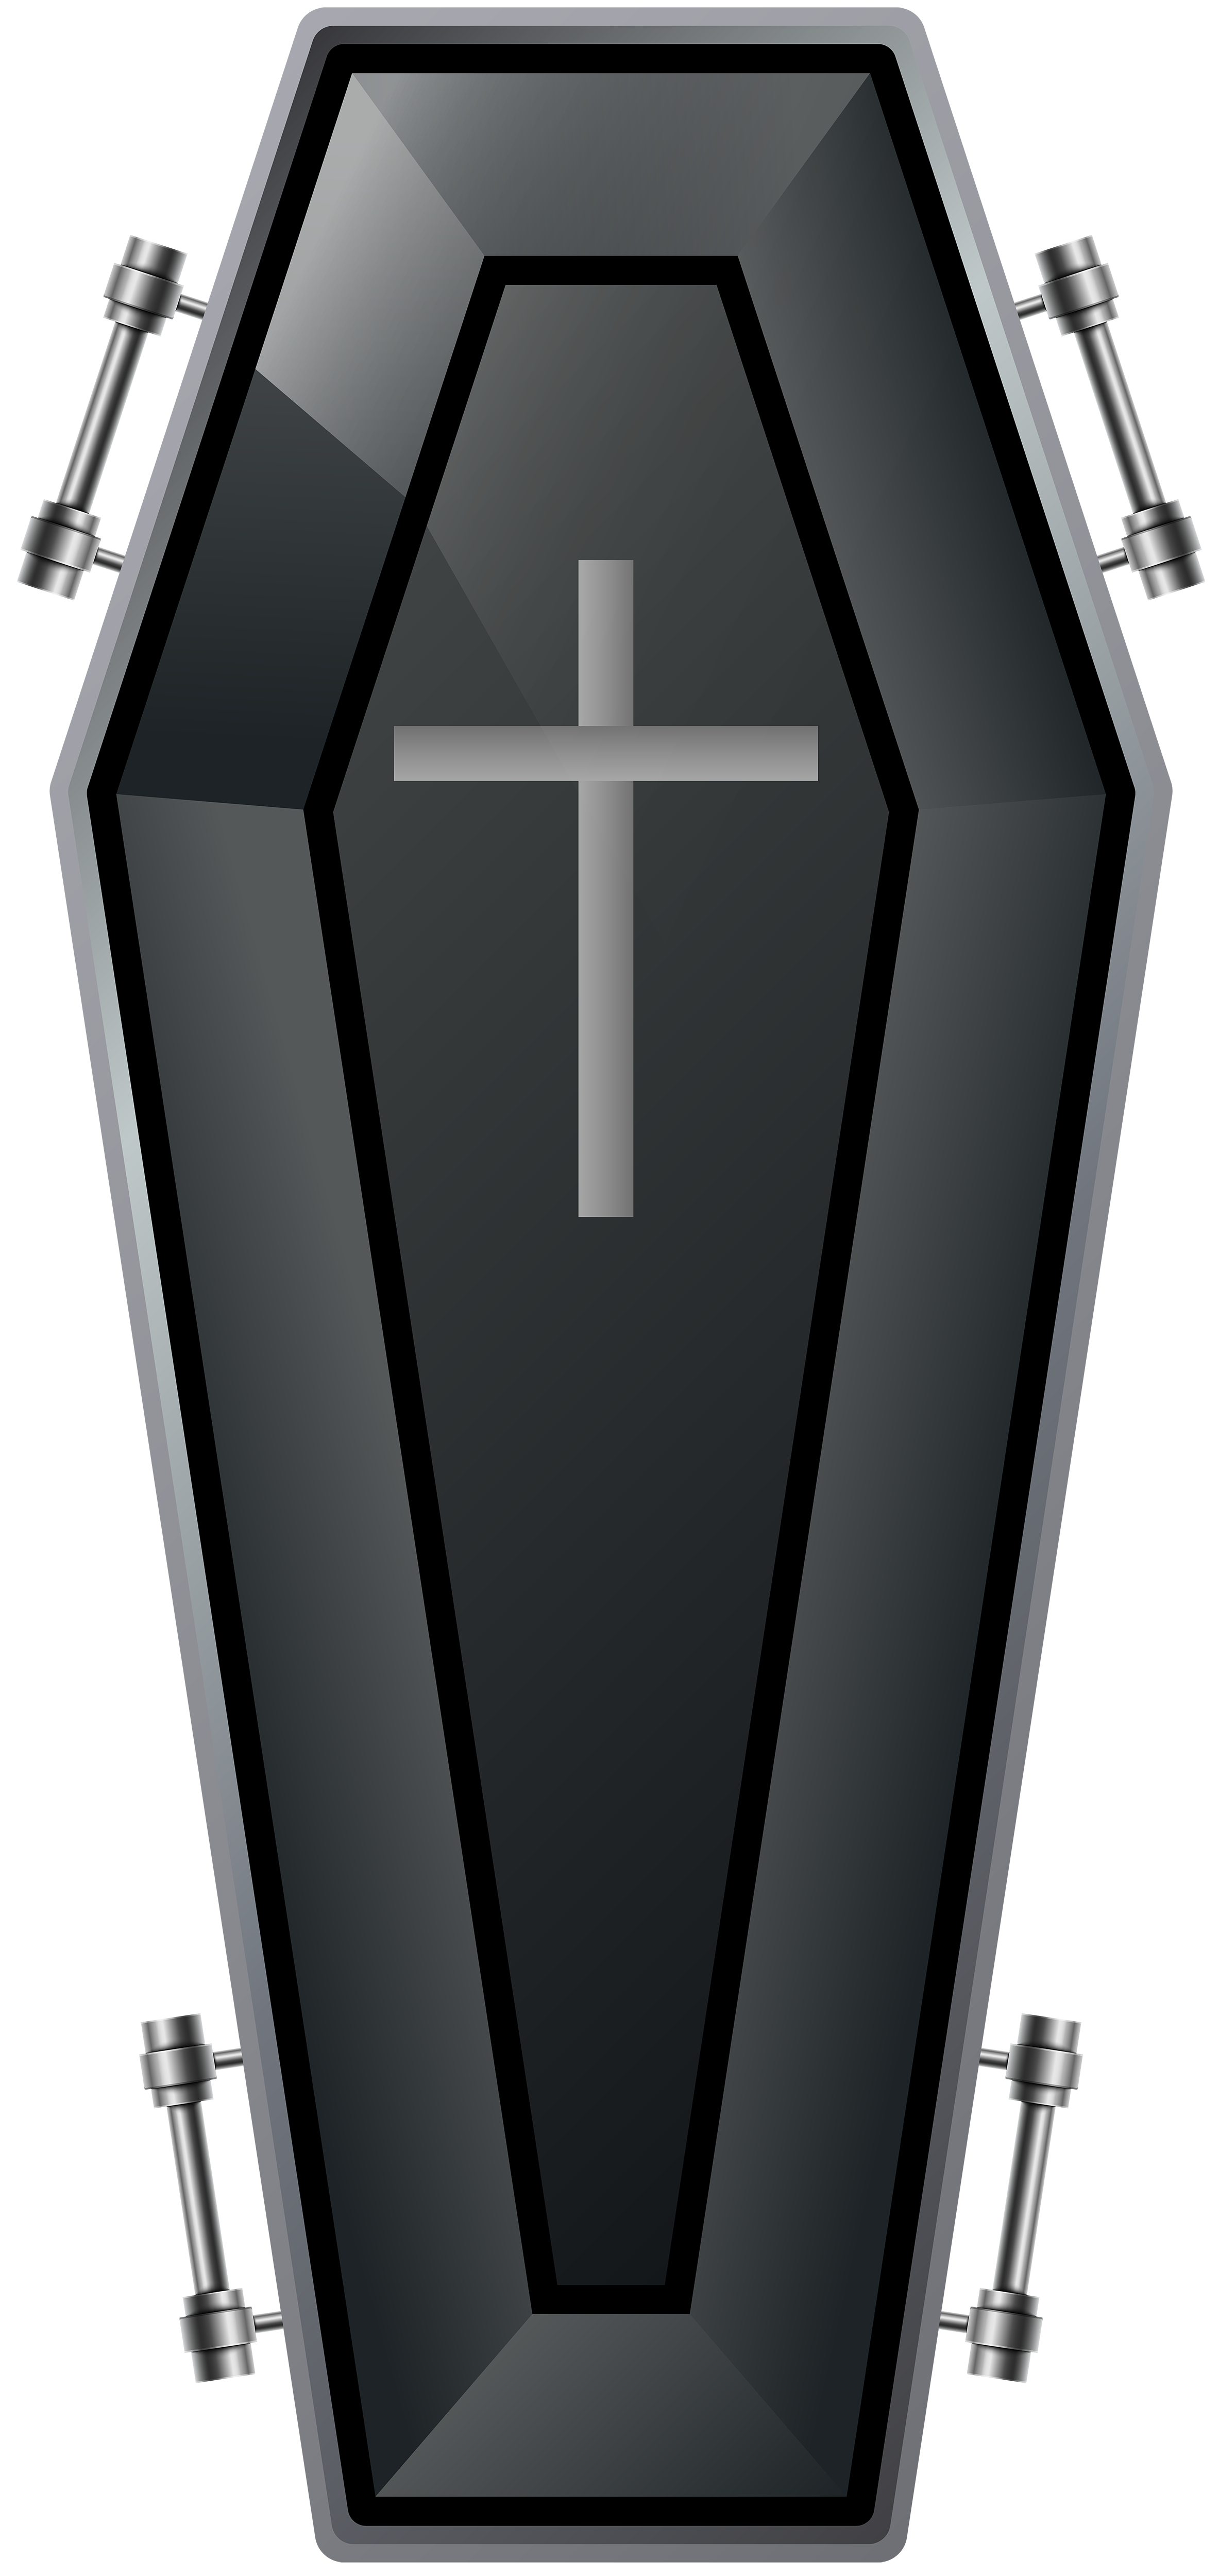 coffin clipart cross